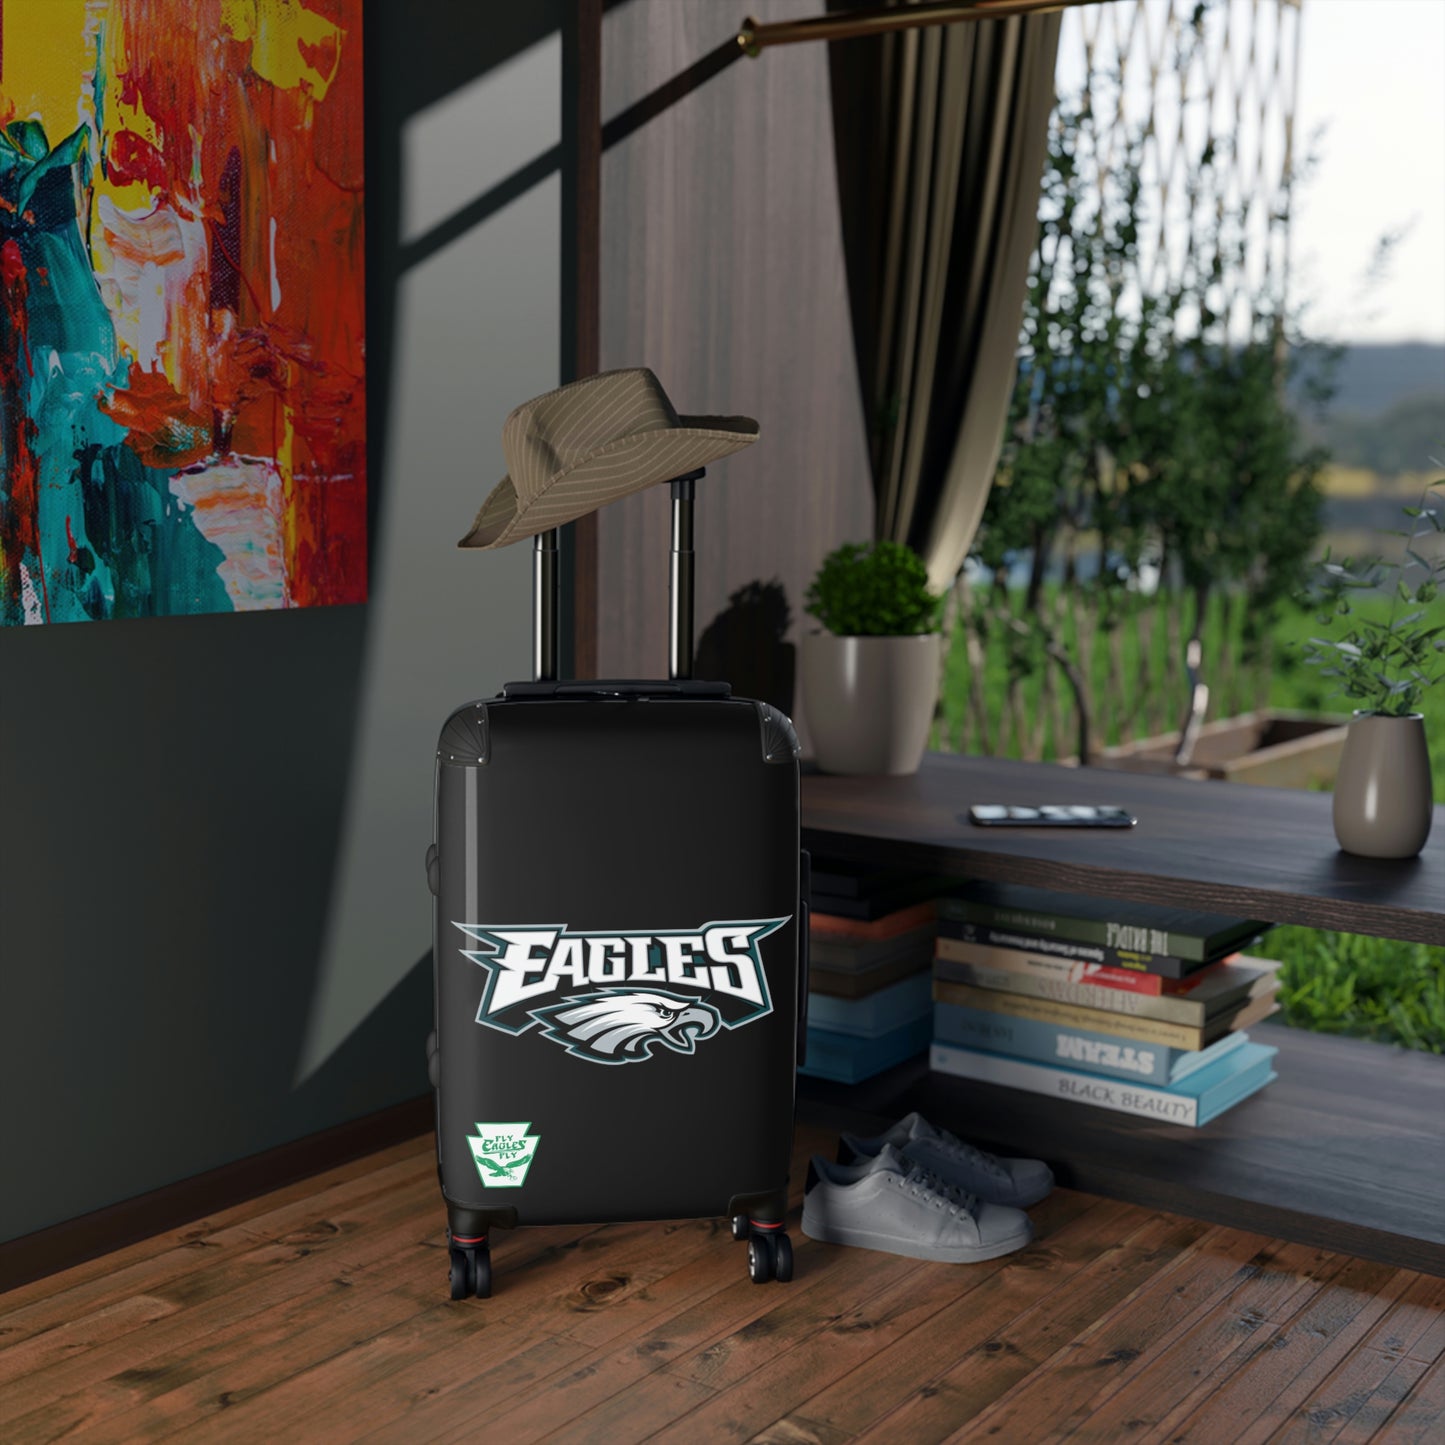 Philadelphia Eagles Suitcase